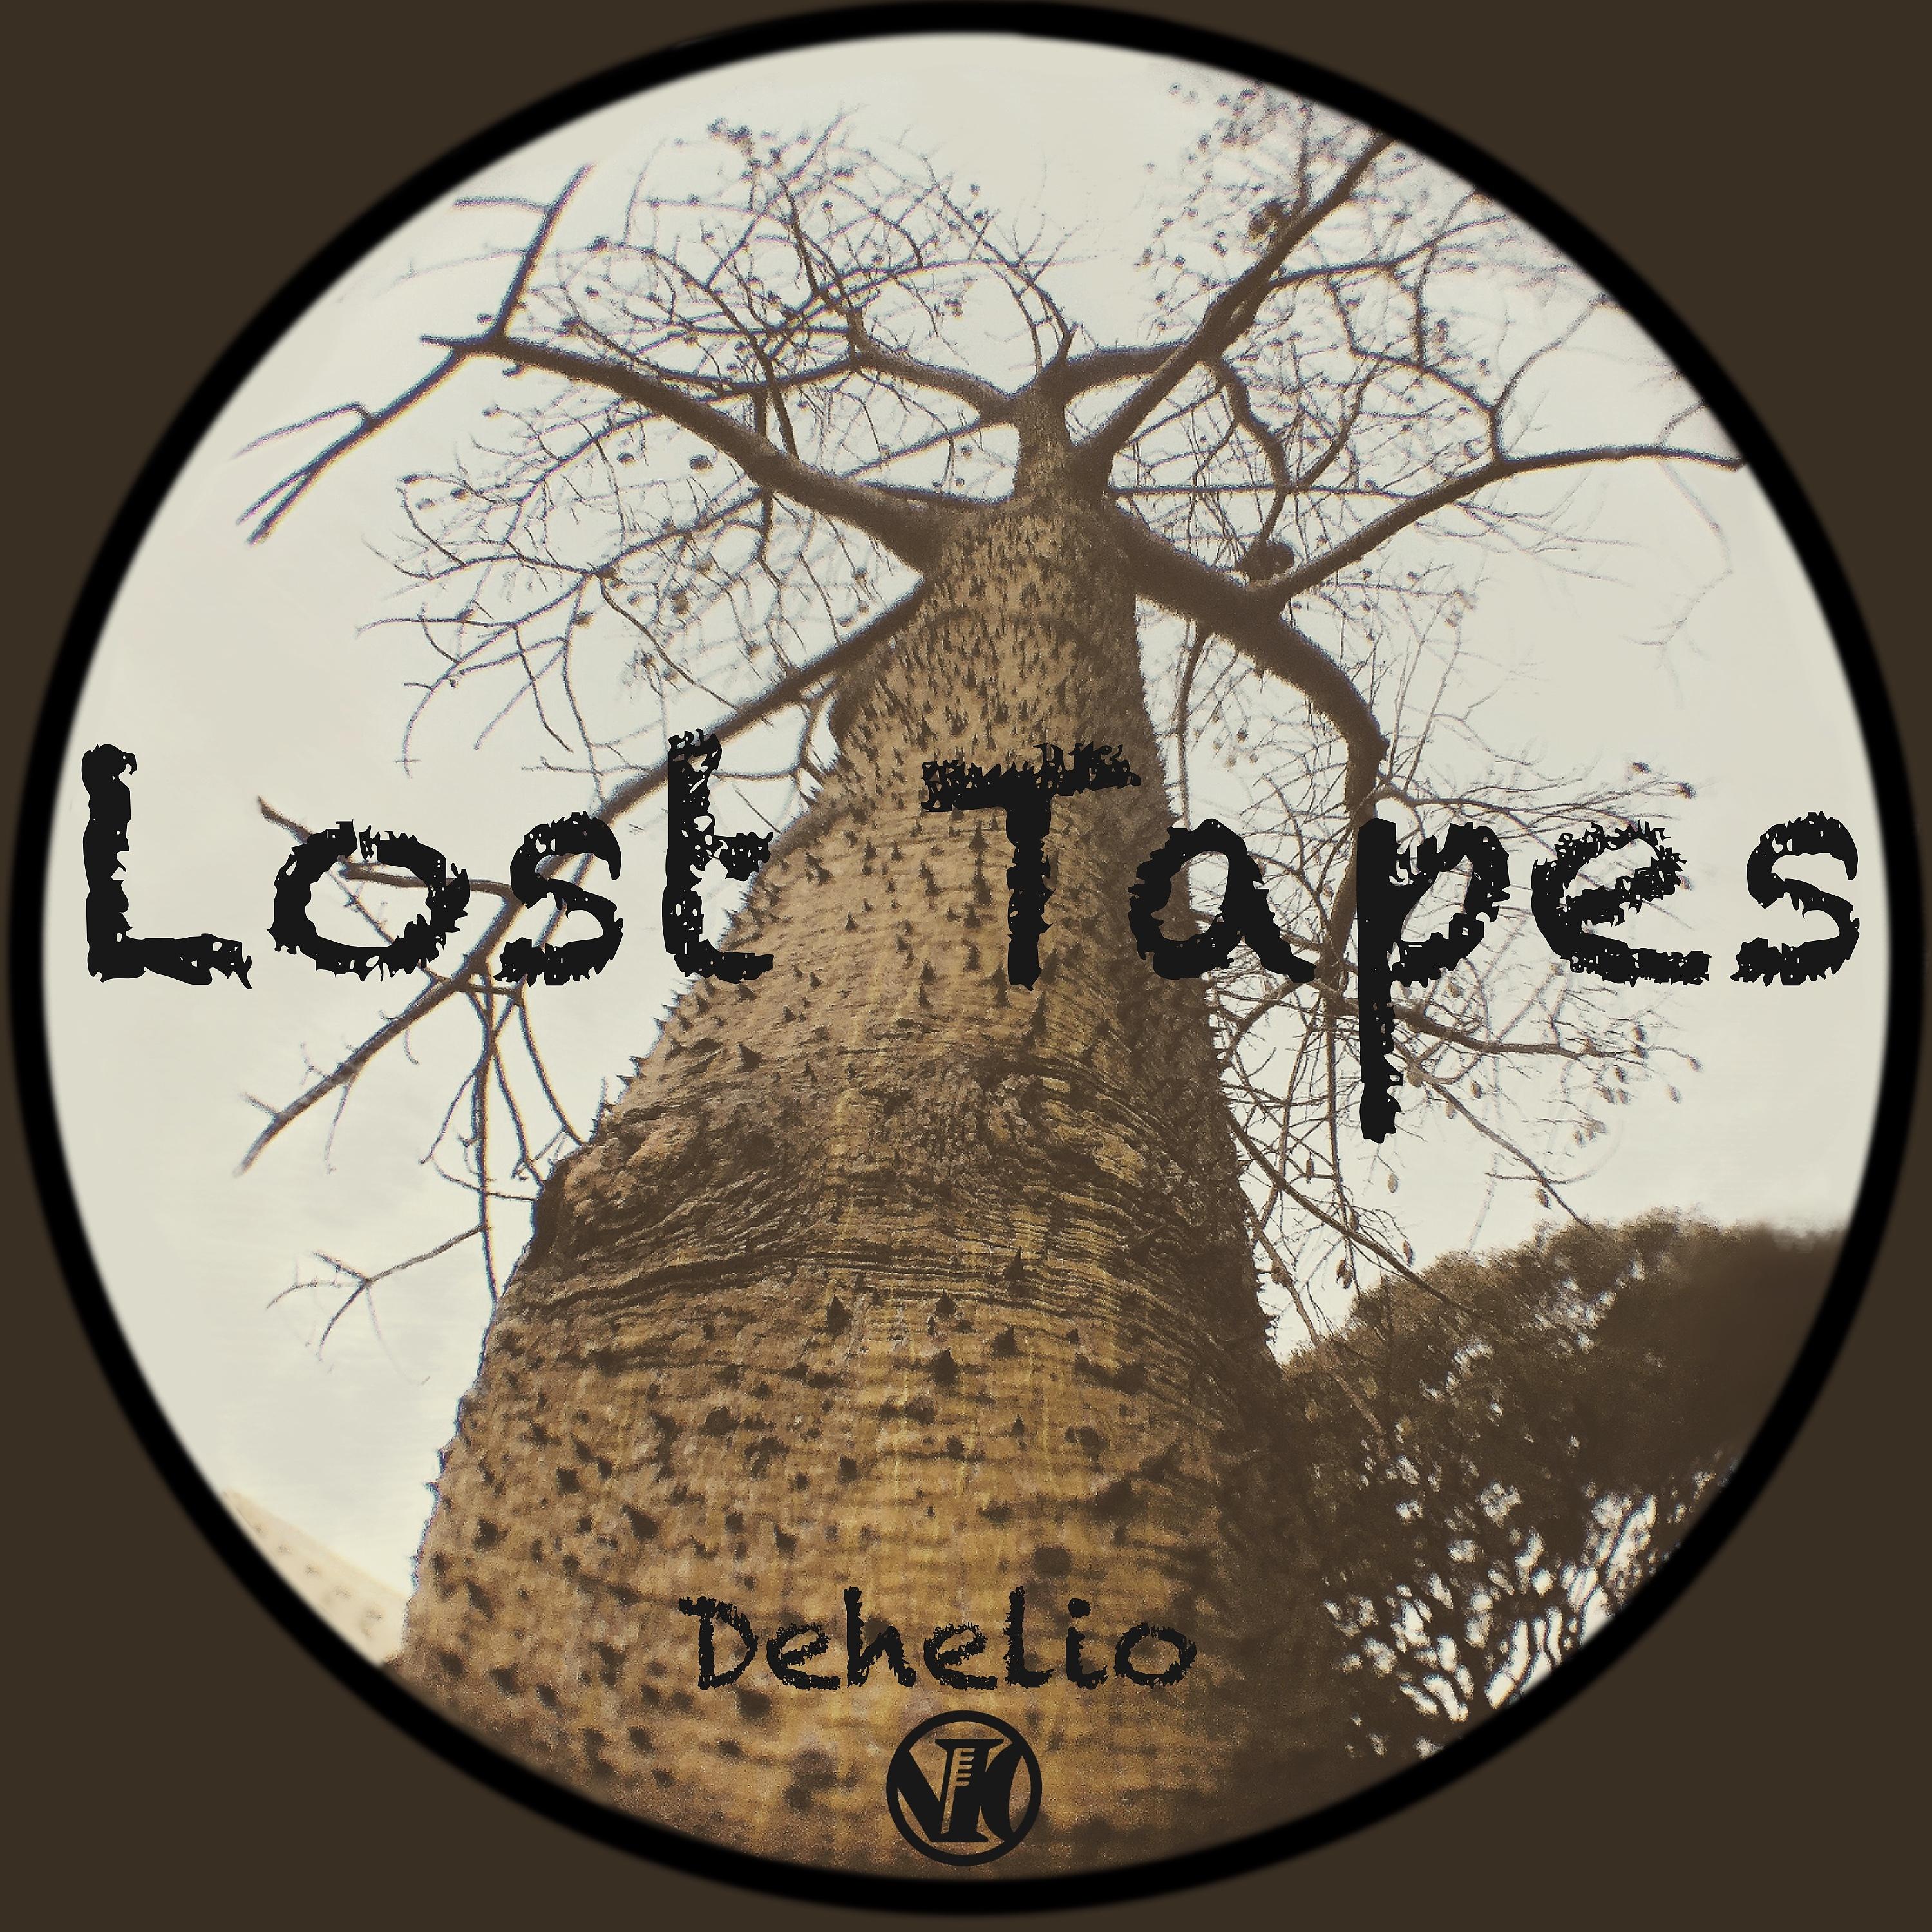 Постер альбома Lost Tapes